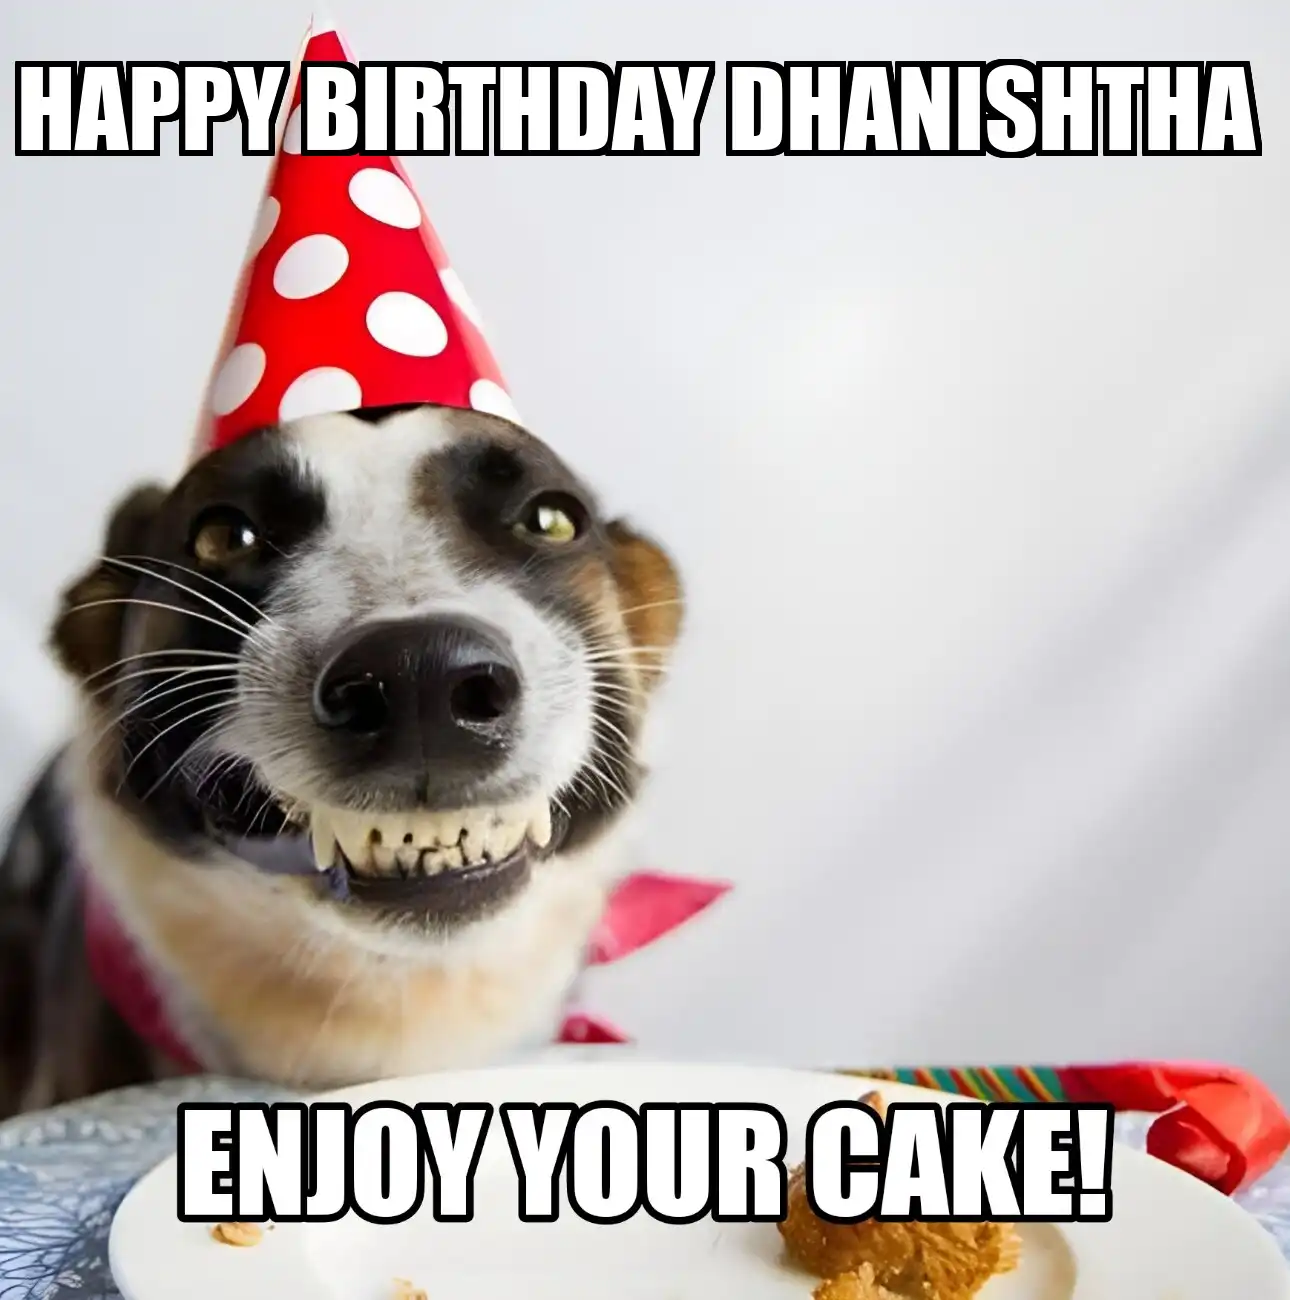 Happy Birthday Dhanishtha Enjoy Your Cake Dog Meme